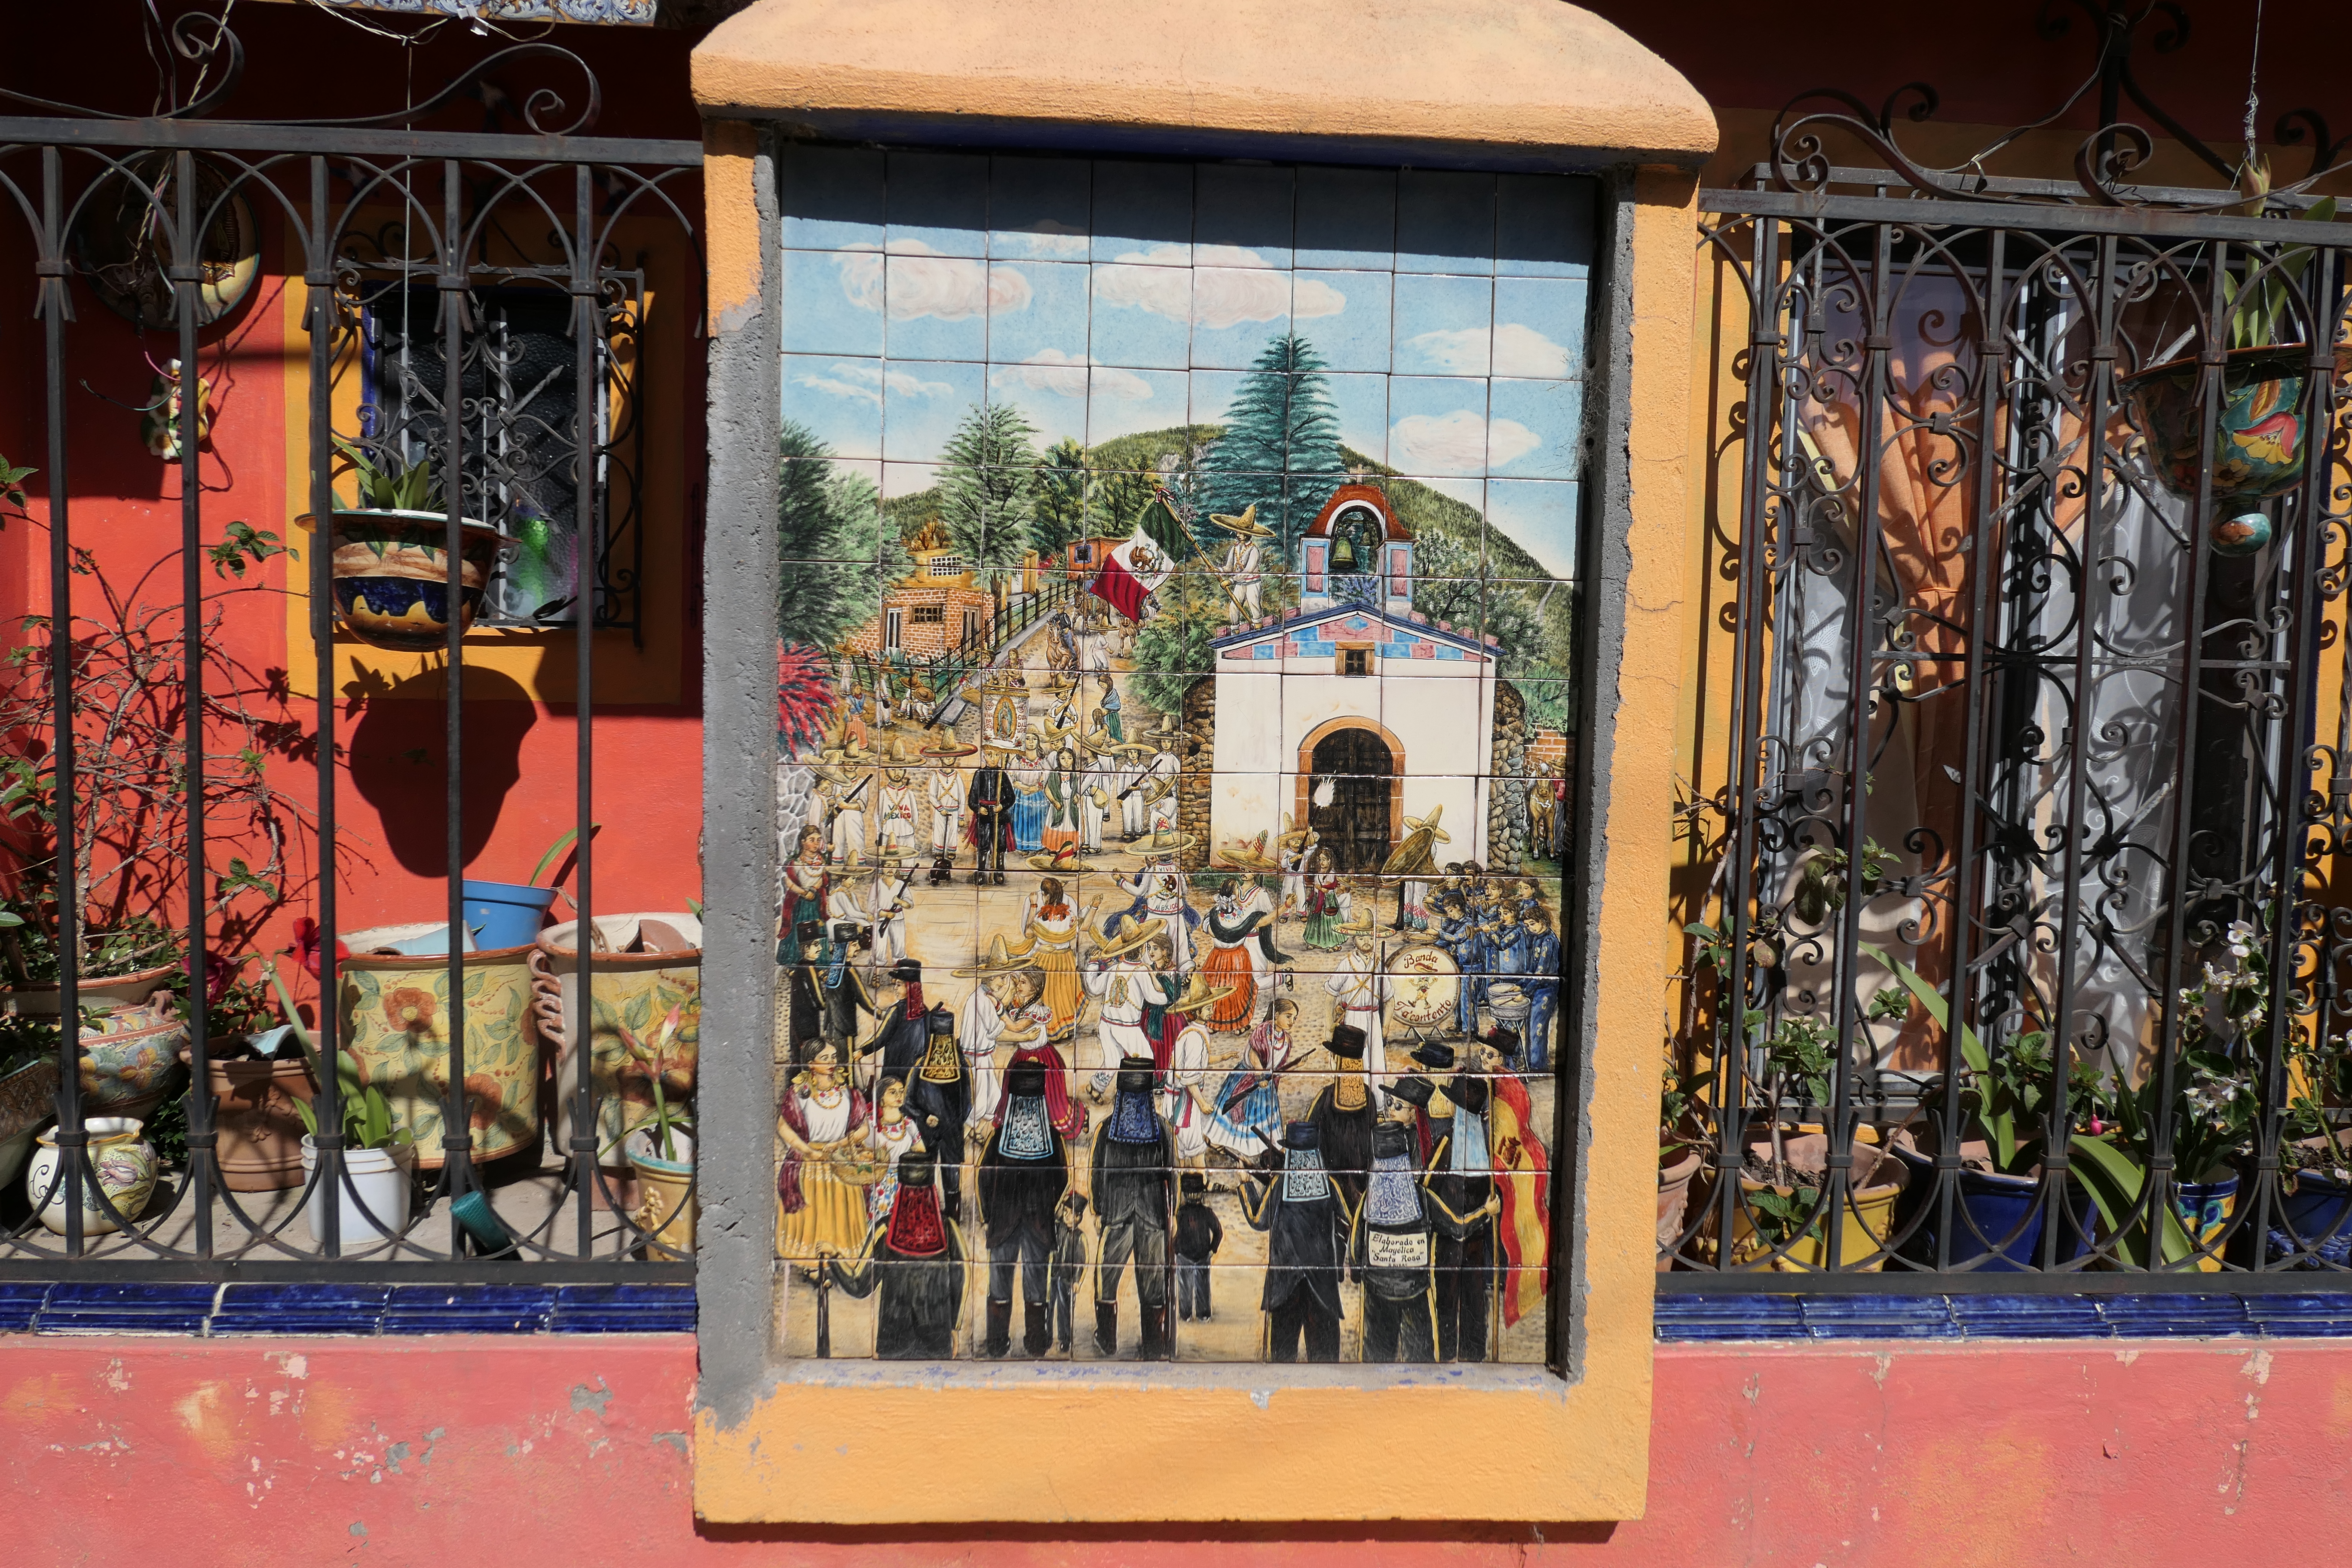 Art is all around you in San Miguel de Allende